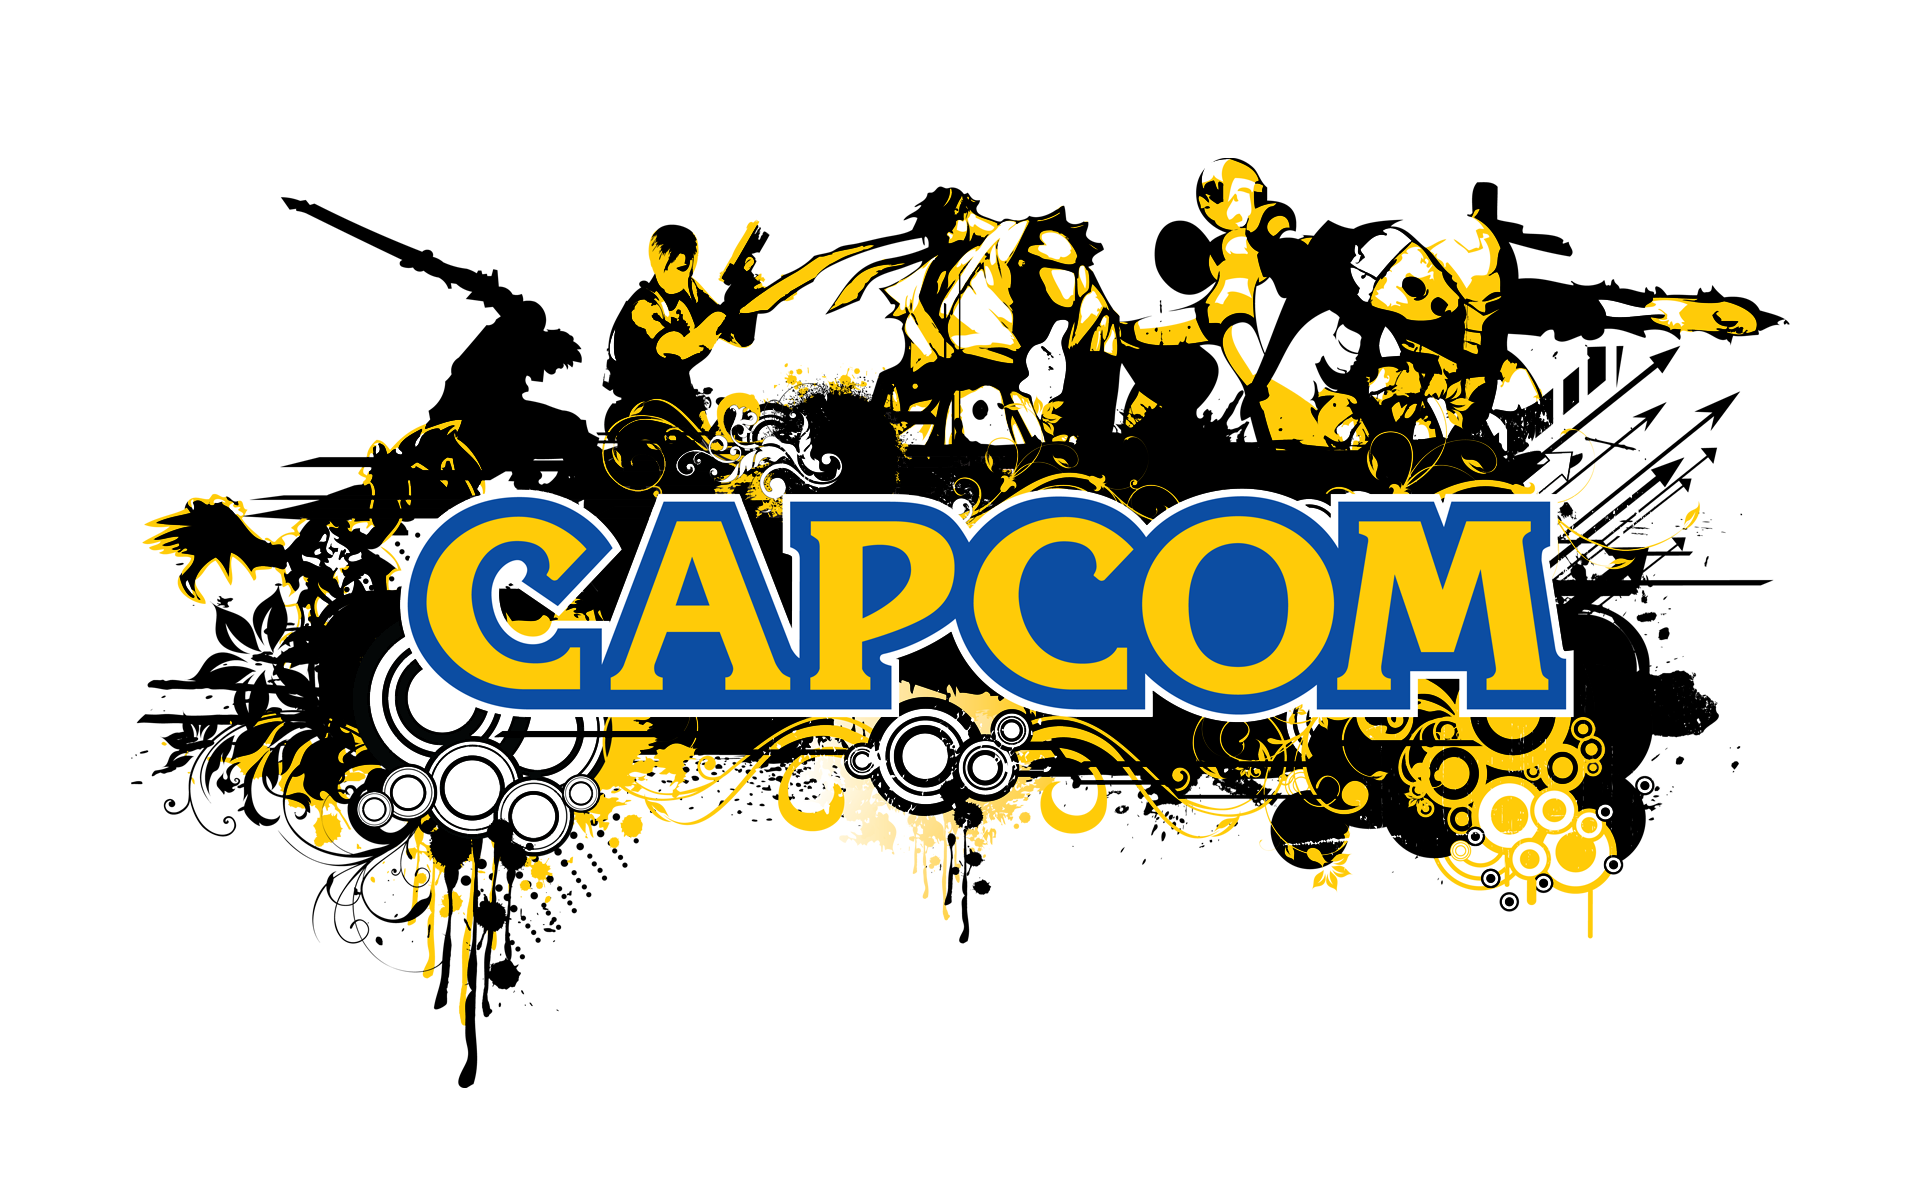 Presentado el Humble Bundle de Capcom para PlayStation